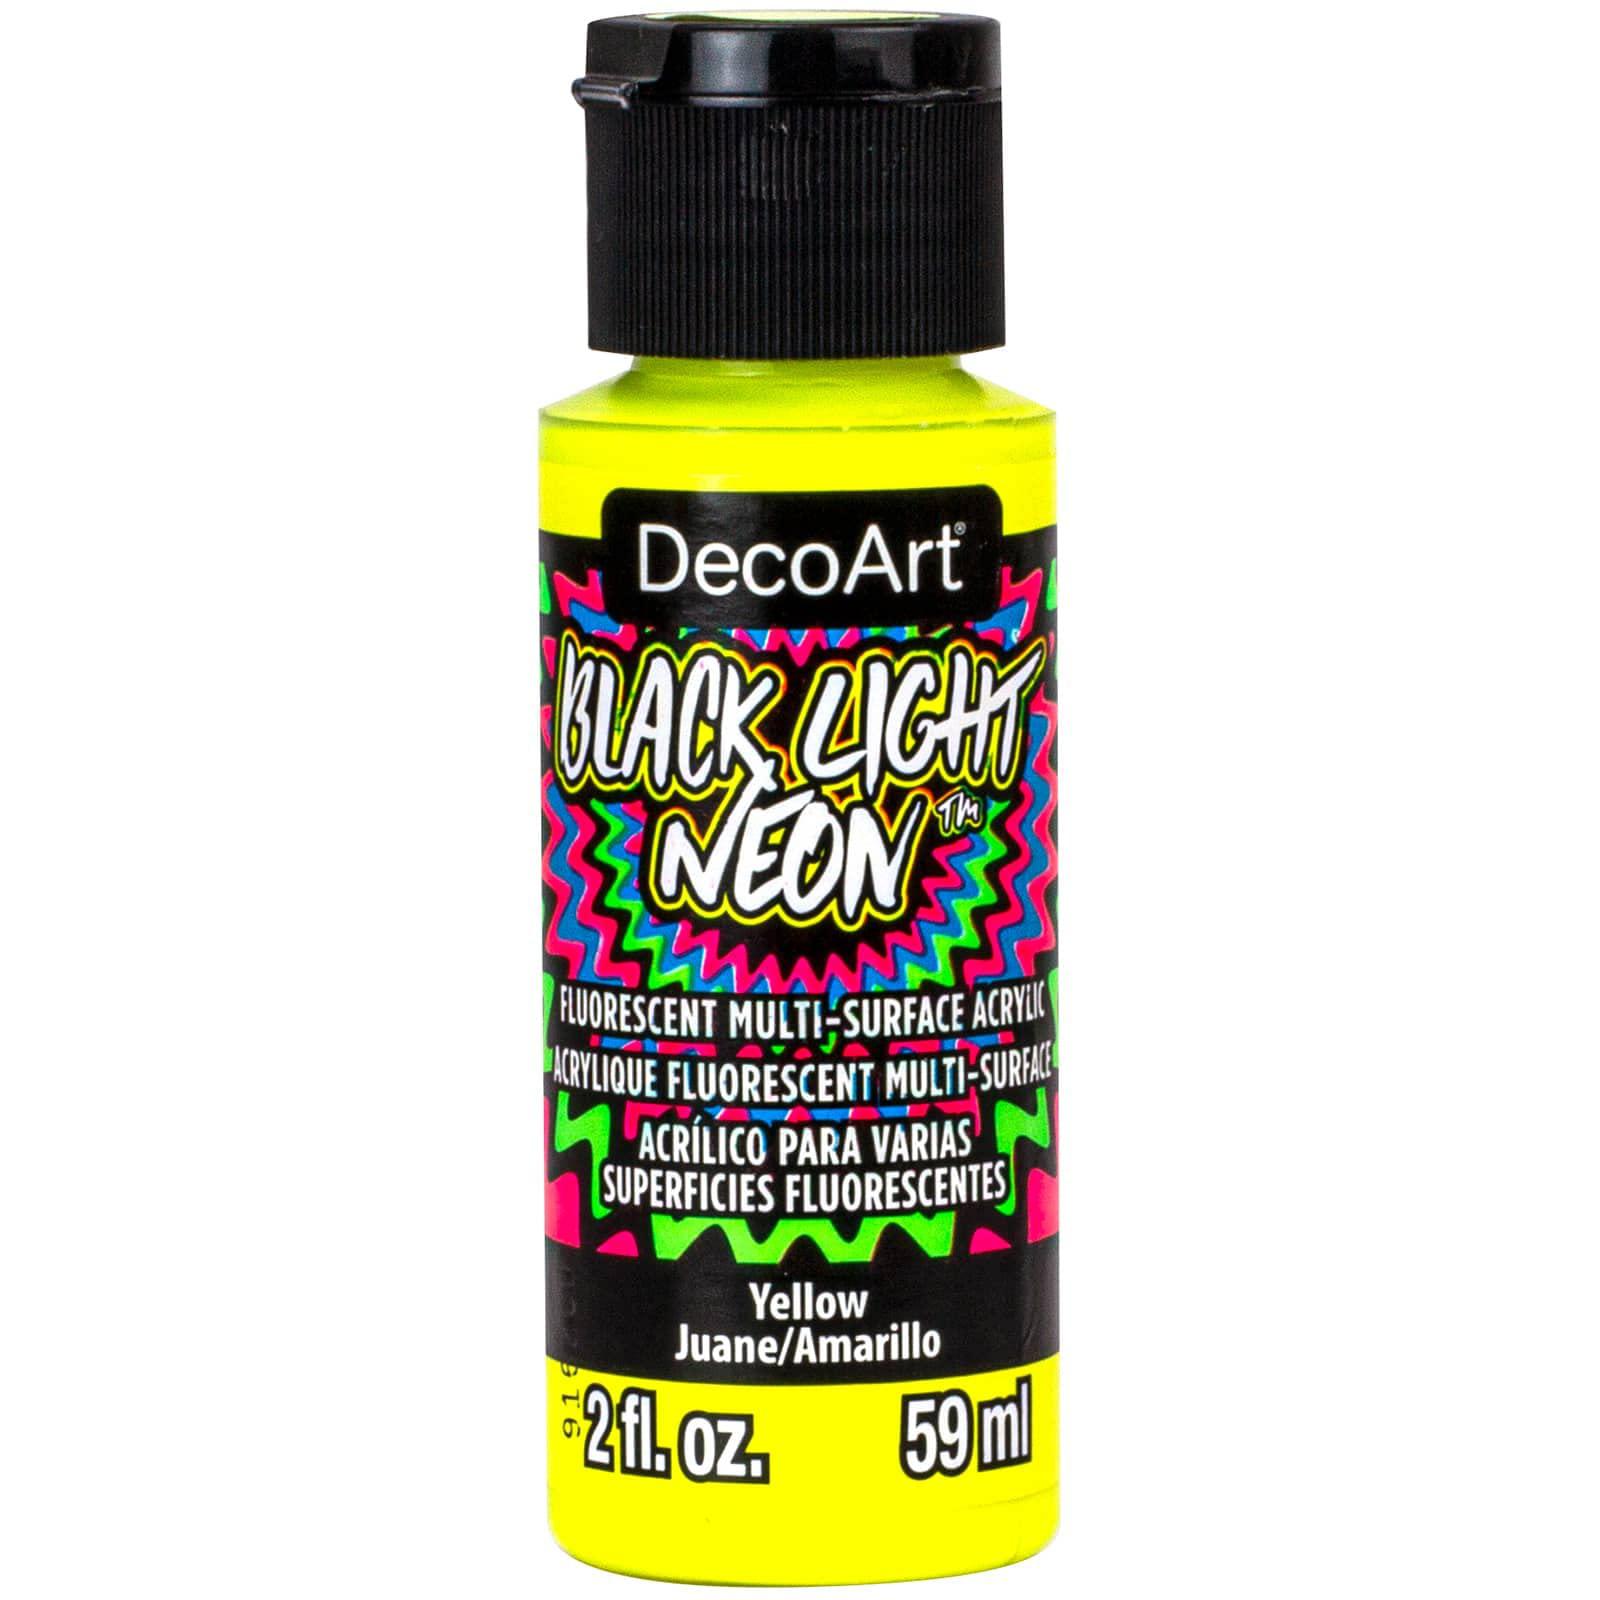 Deco Art 12 pack: decoart black light neon fluorescent multi-surface acrylic paint, 2oz.